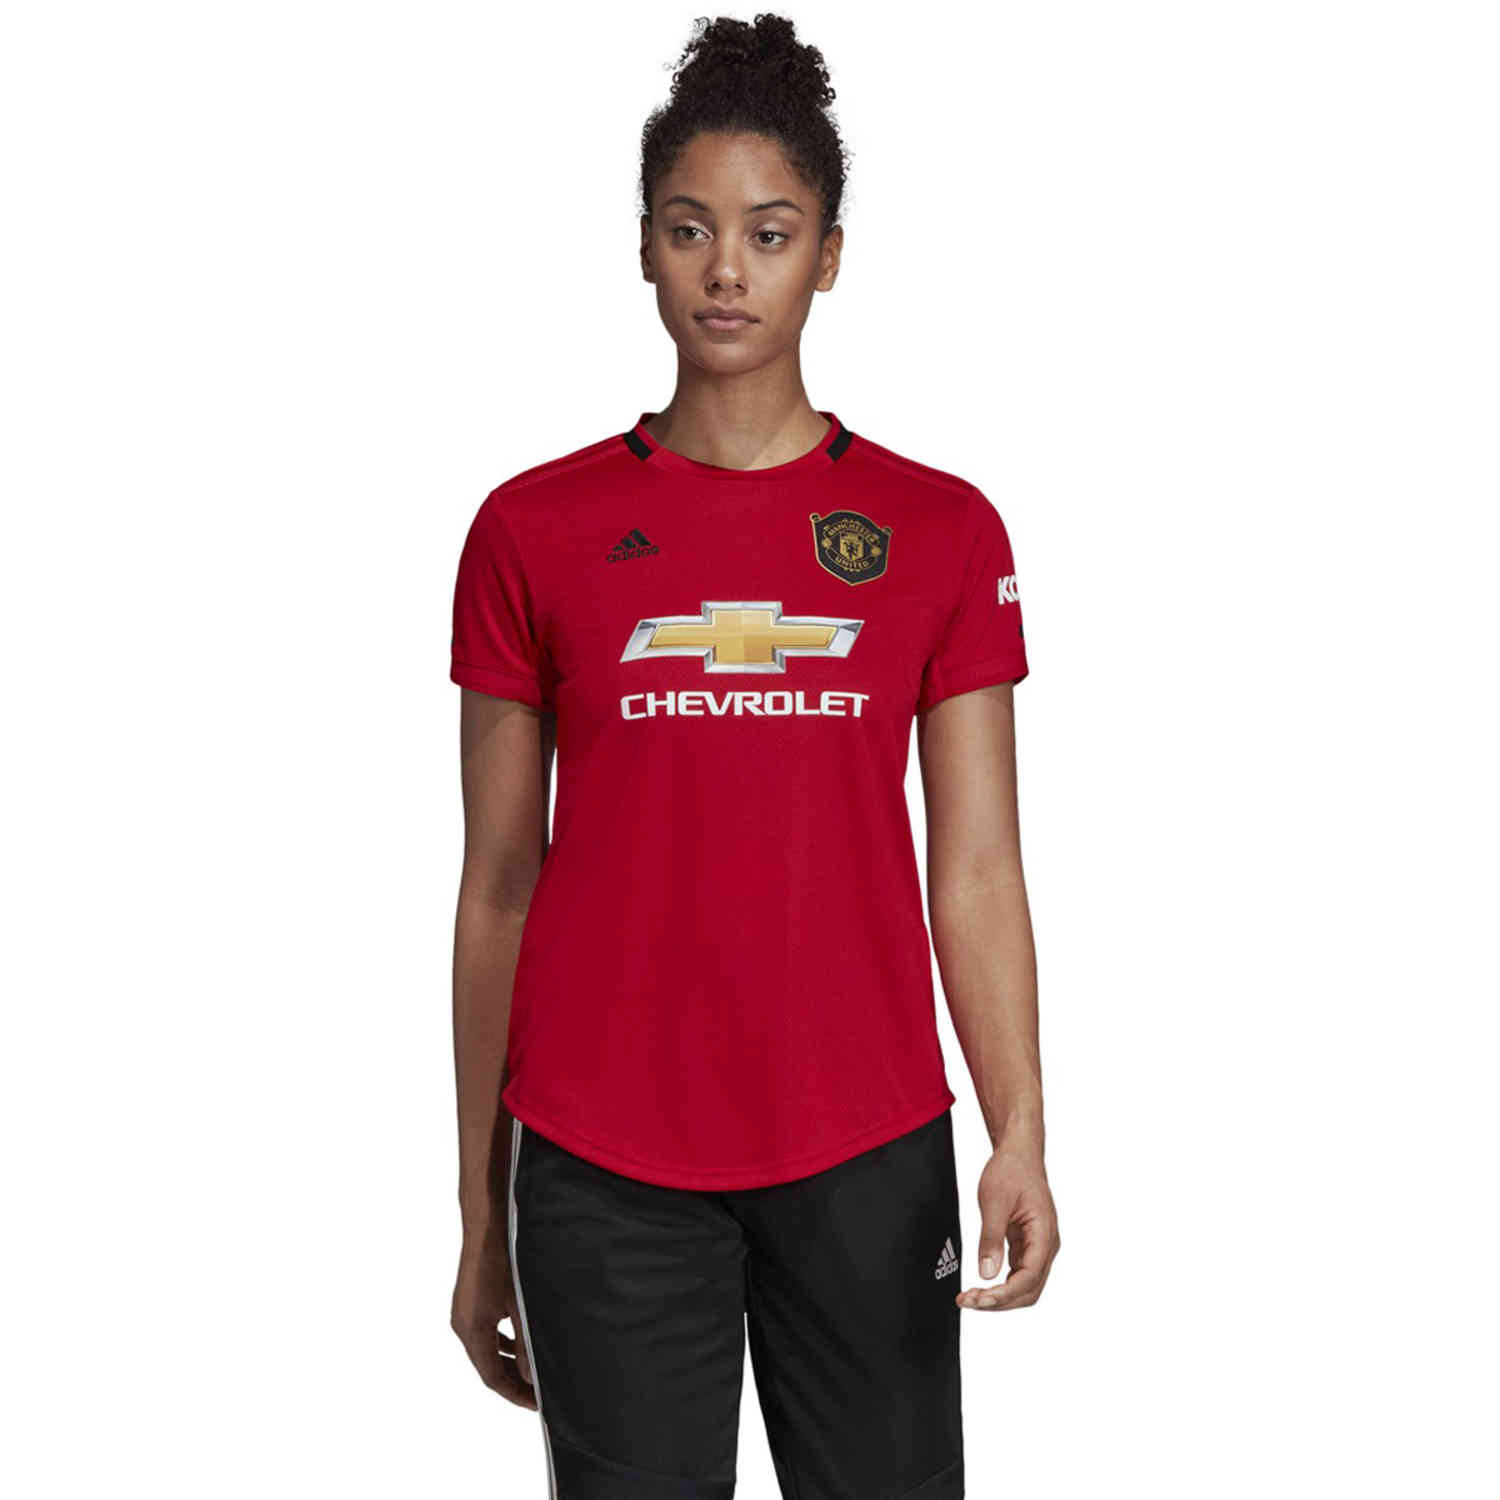 2019/20 Womens adidas Manchester United Home Jersey SoccerPro